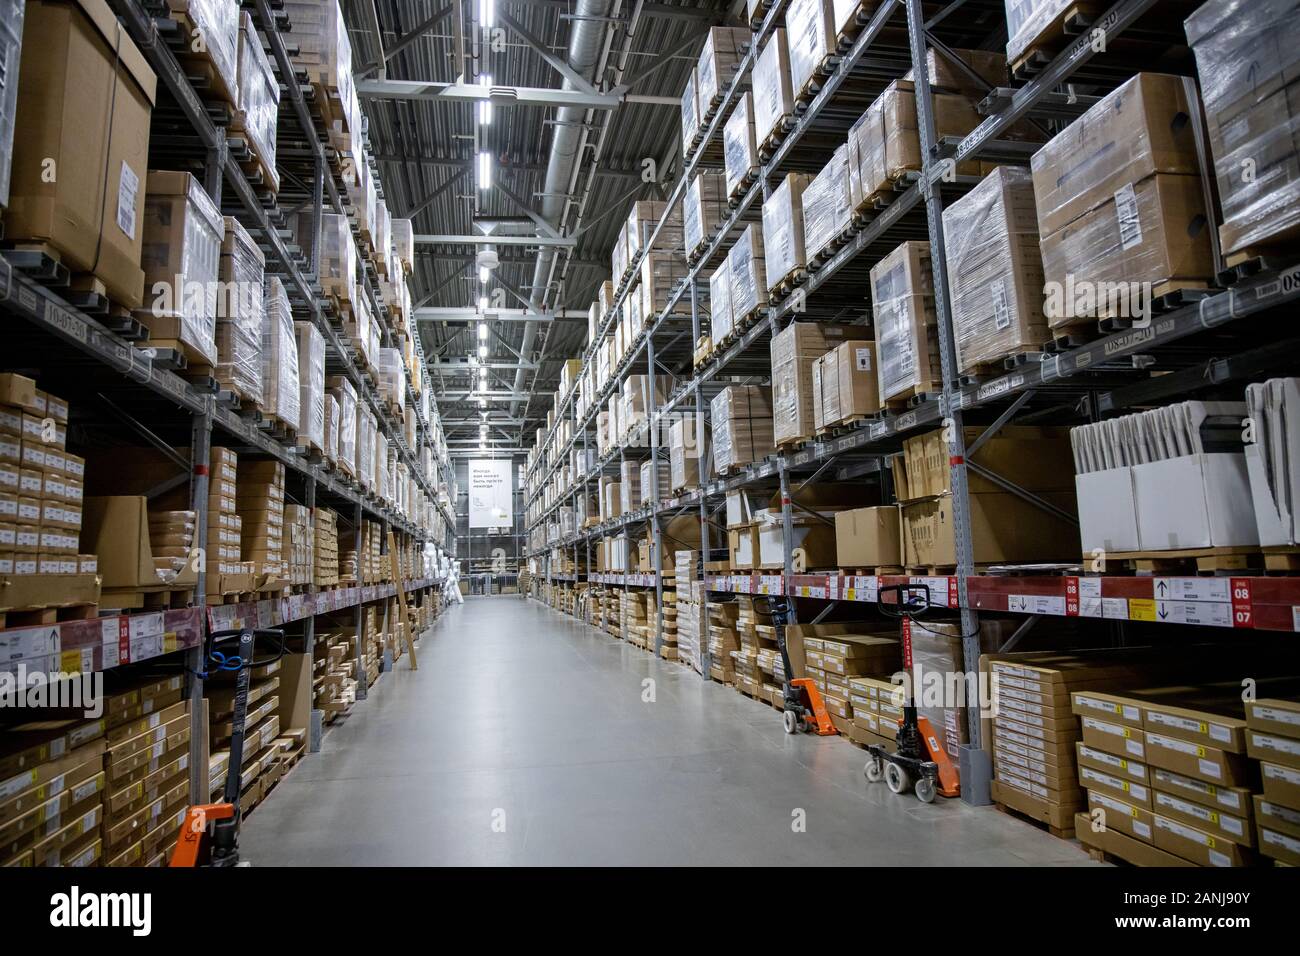 Mega Moscow Moscow January 16 2020 Warehouse Aisle In An Ikea